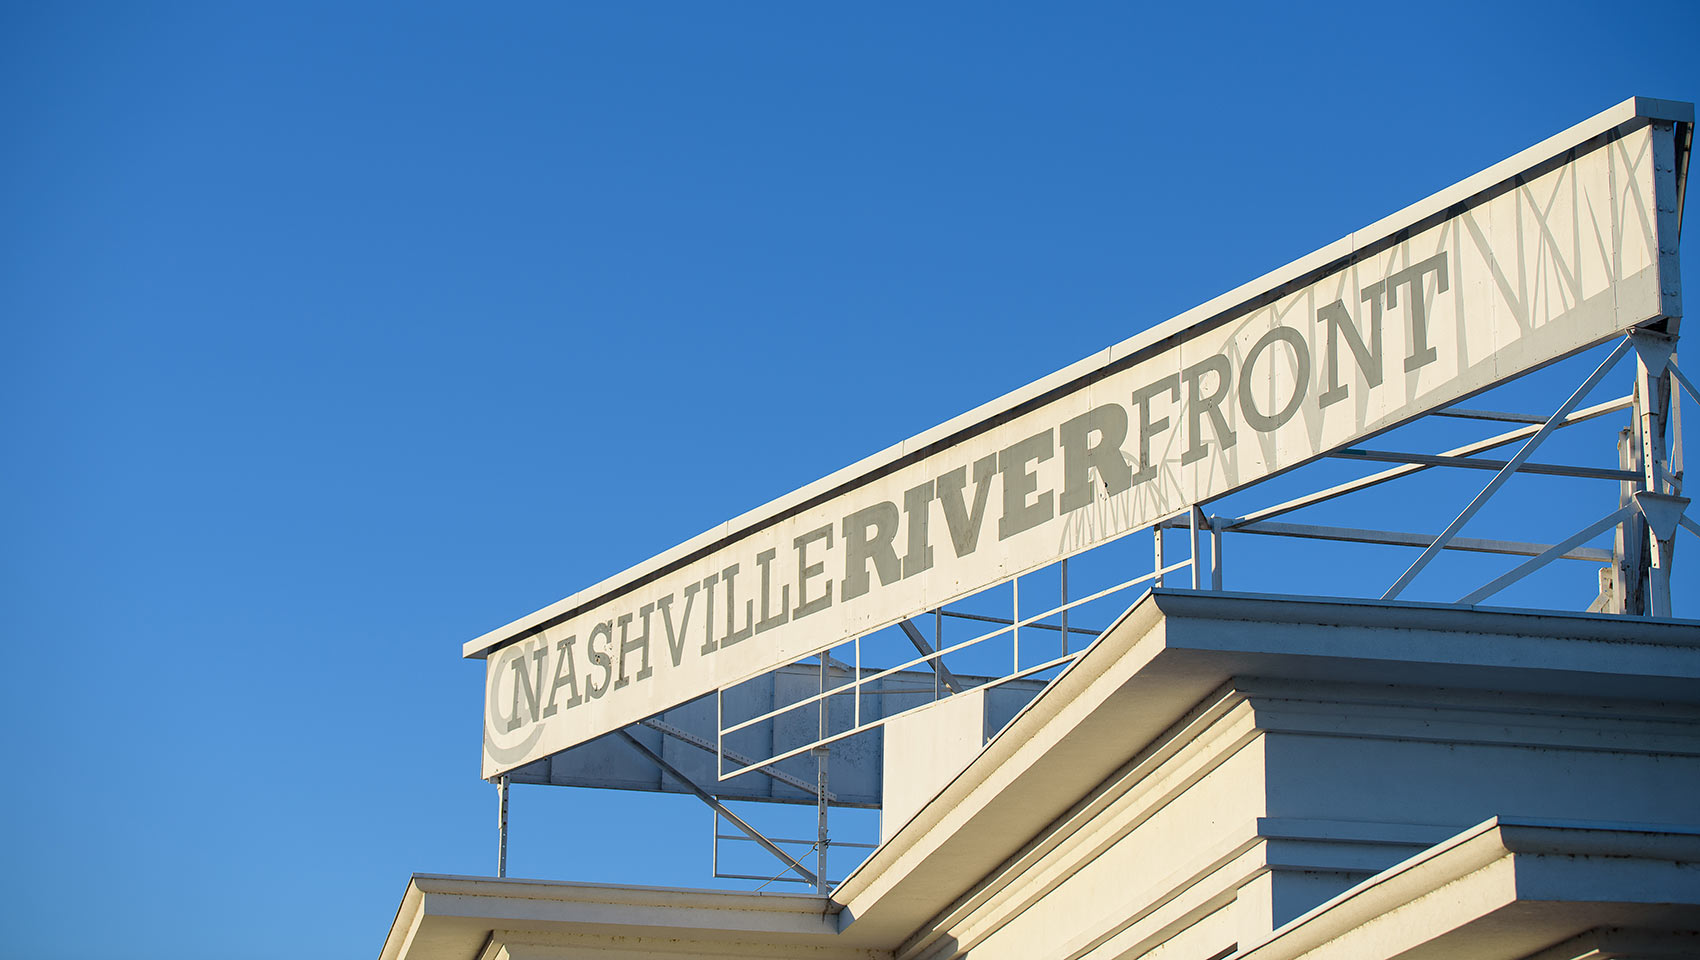 Nashville riverfront